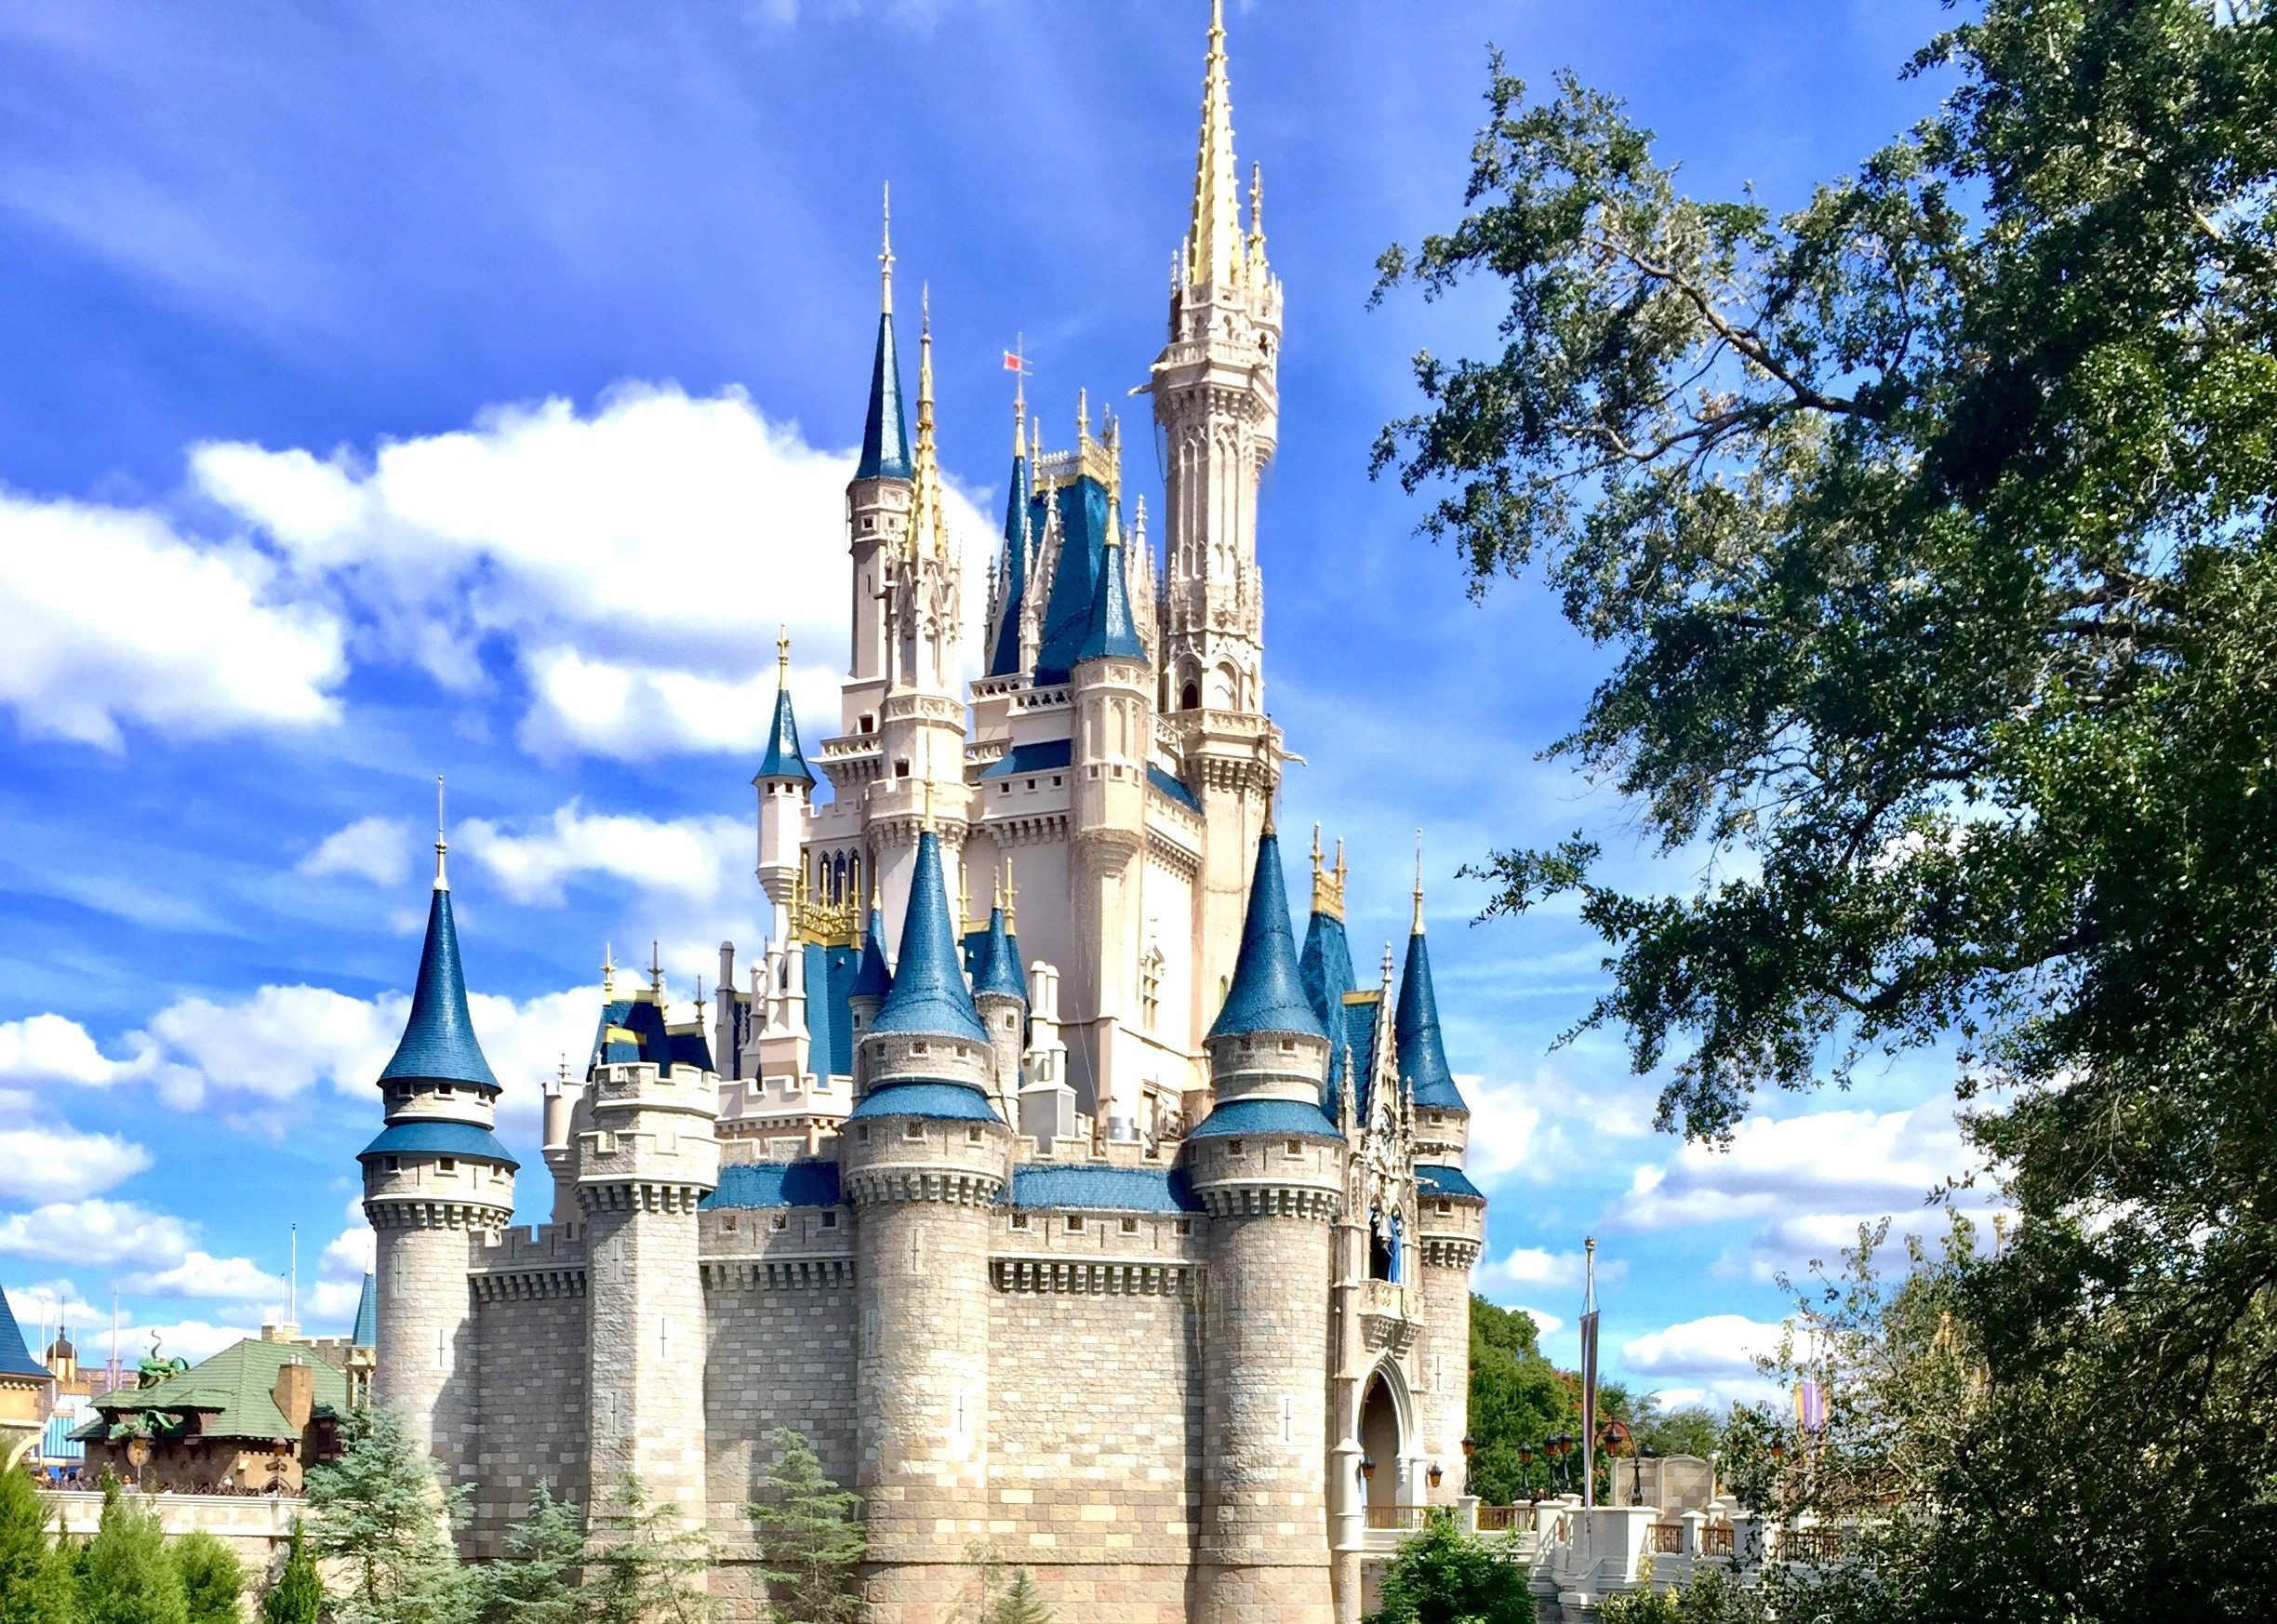 Side view of Cinderella's Castle at the Magic Kingdom in Walt Disney World